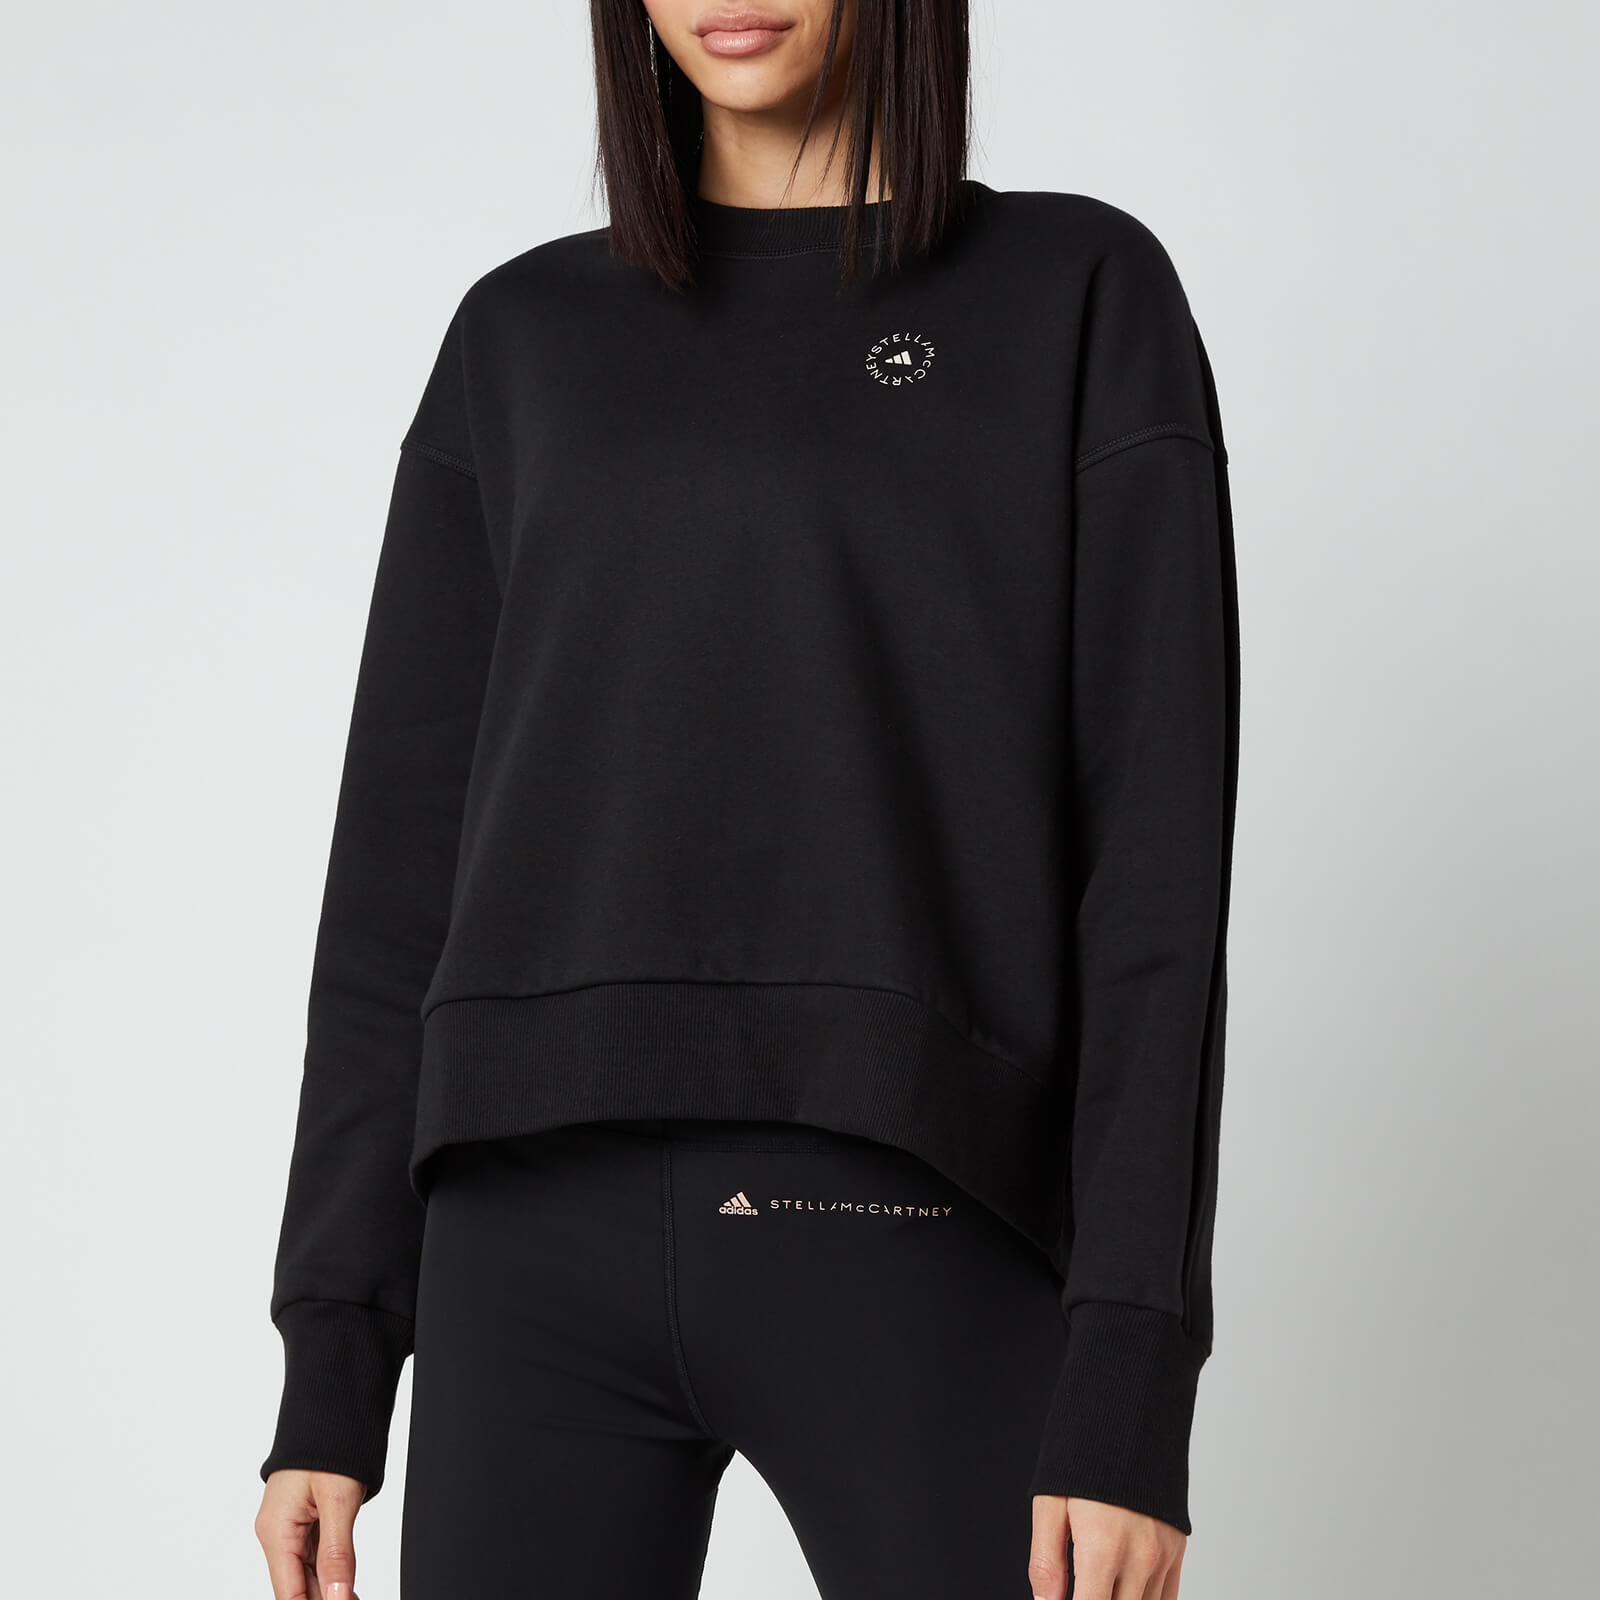 Adidas by Stella McCartney Women's Sweatshirt - Black - L